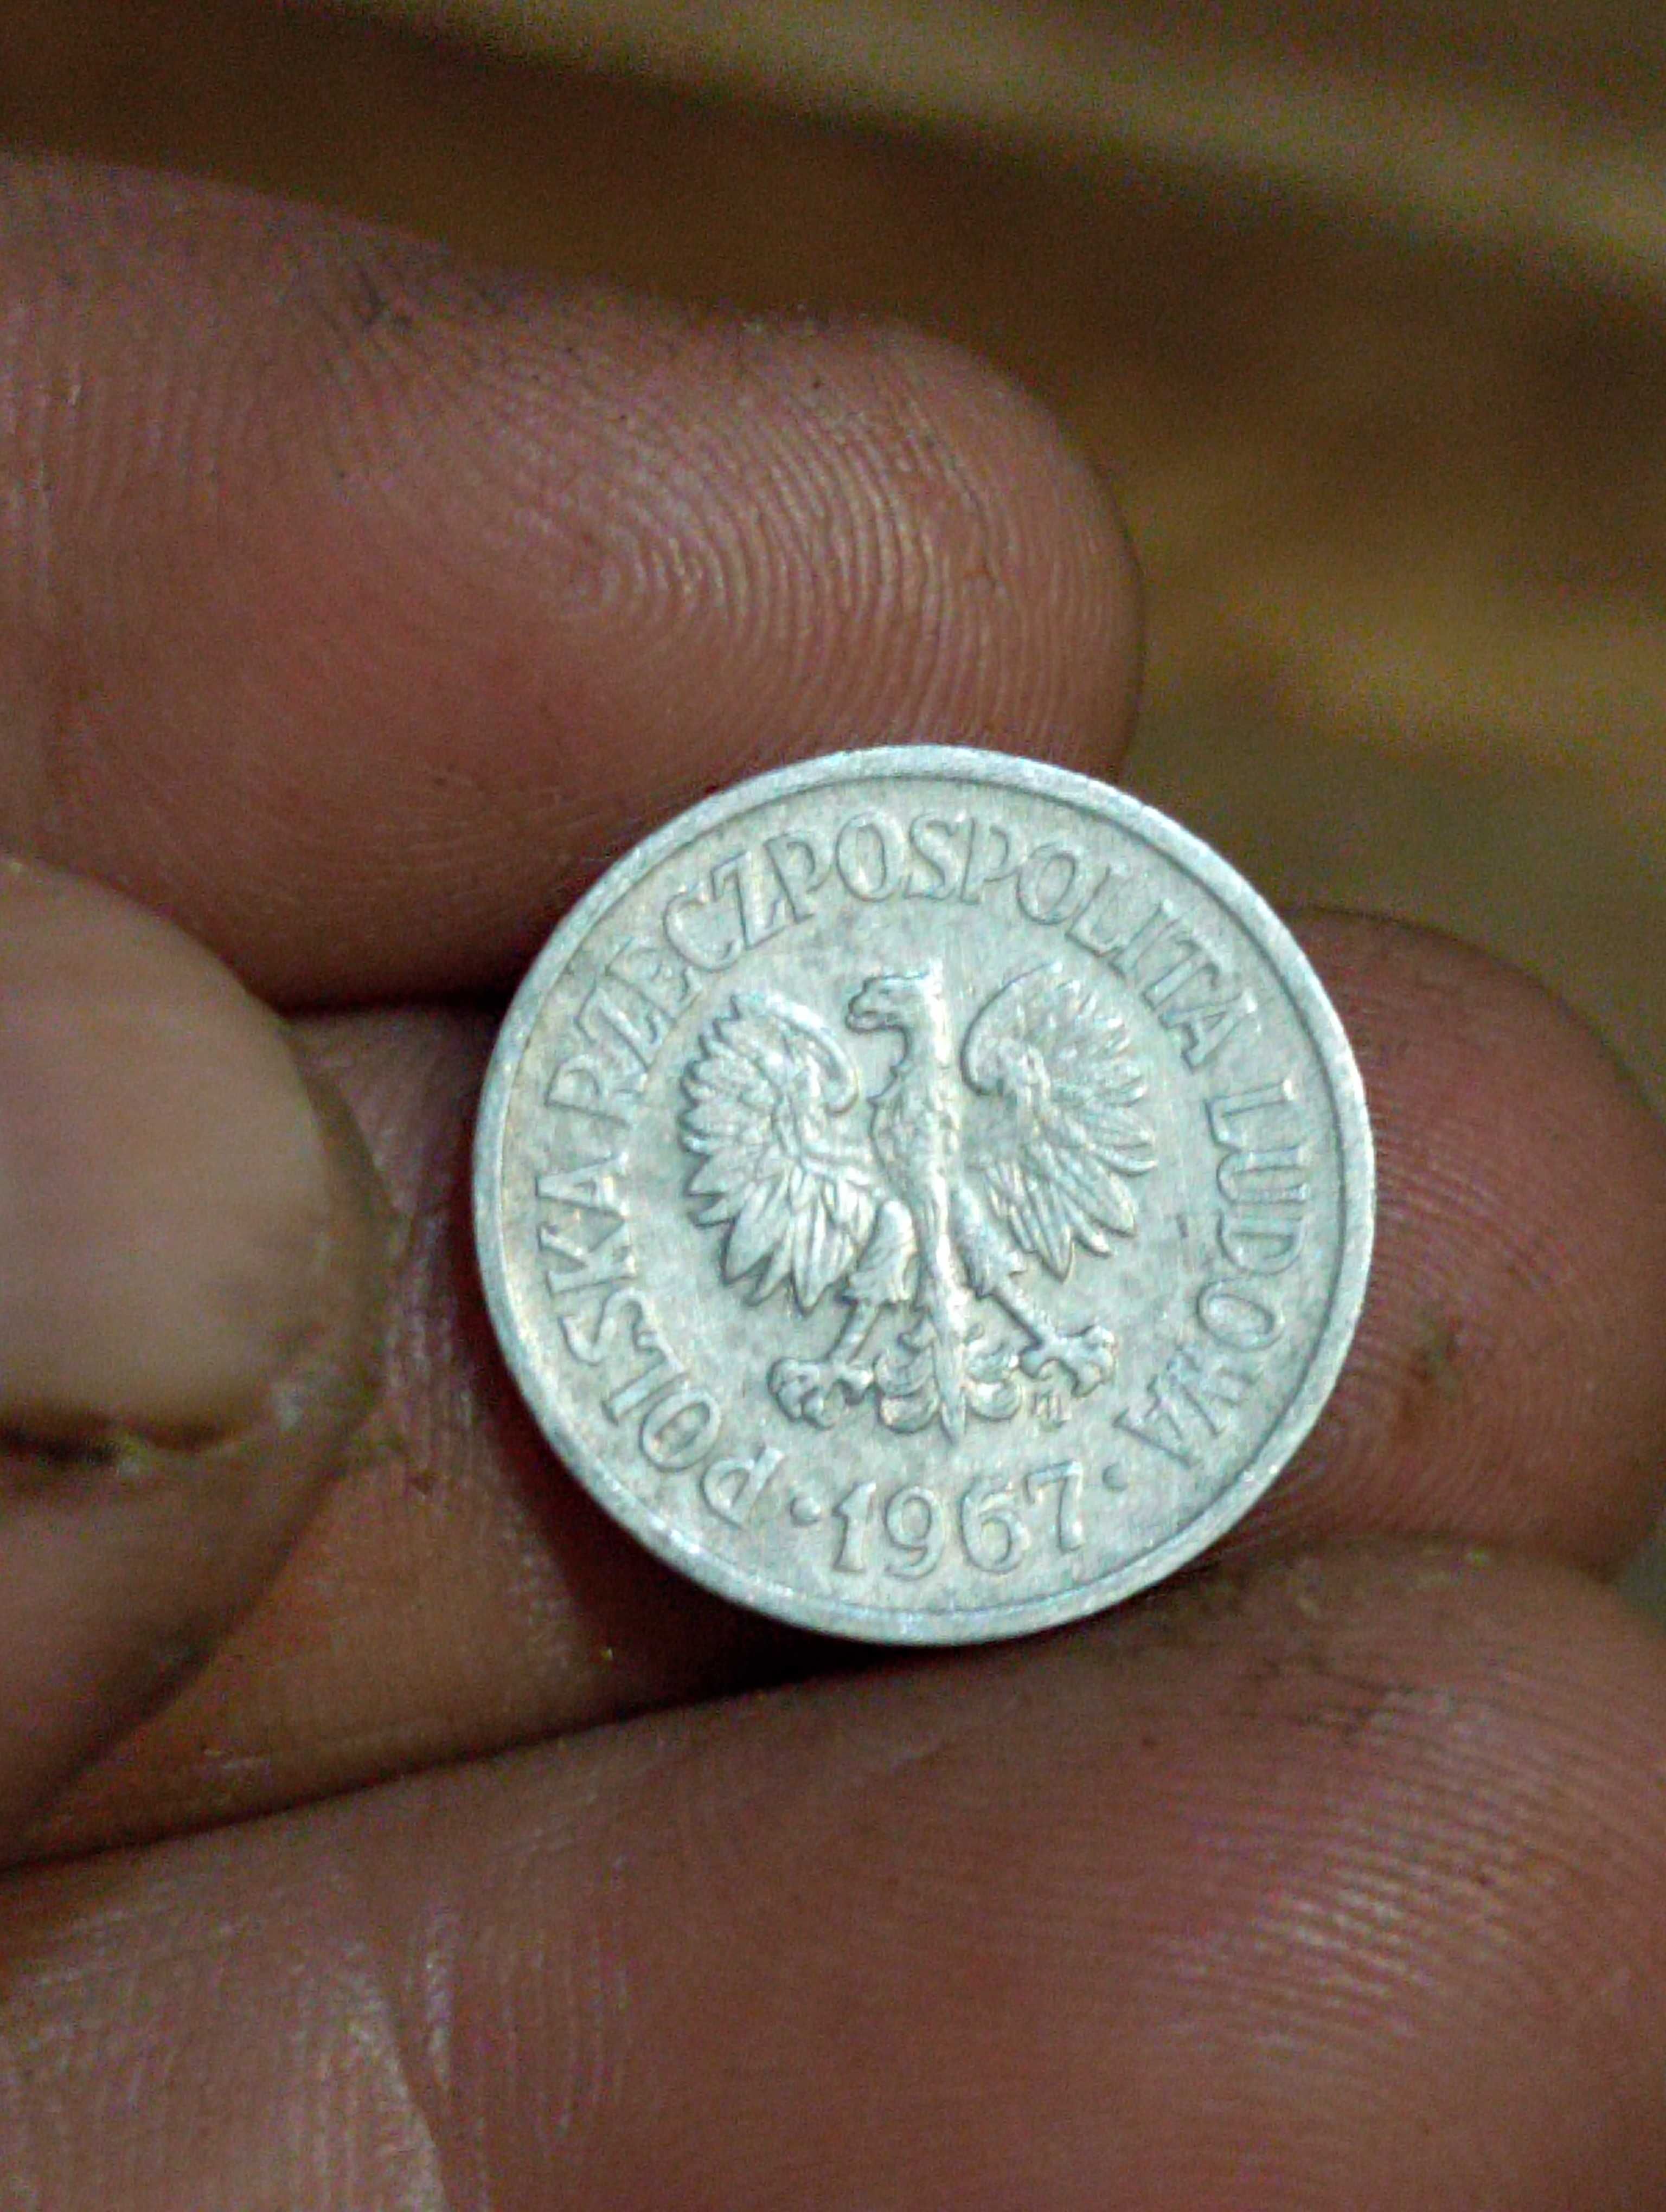 Moneta druga 10 groszy 1967 rok